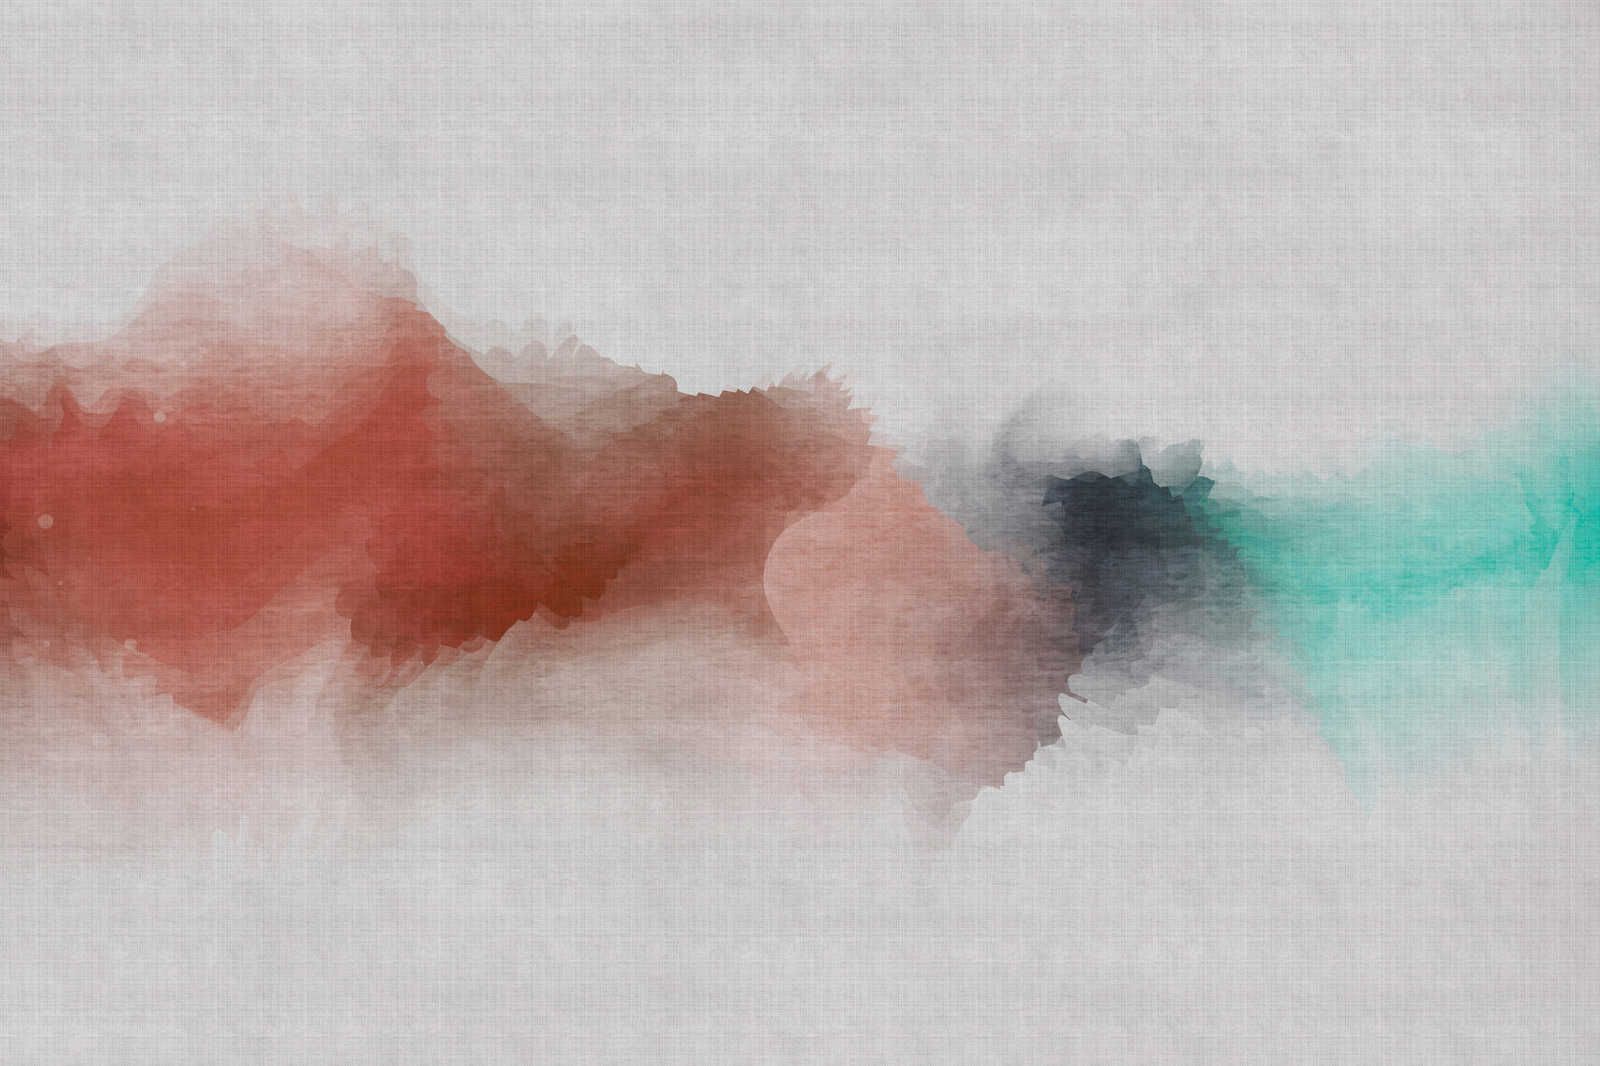             Daydream 2 - Leinwandbild in naturleinen Optik mit Farbfleck im Aquarell Stil – 1,20 m x 0,80 m
        